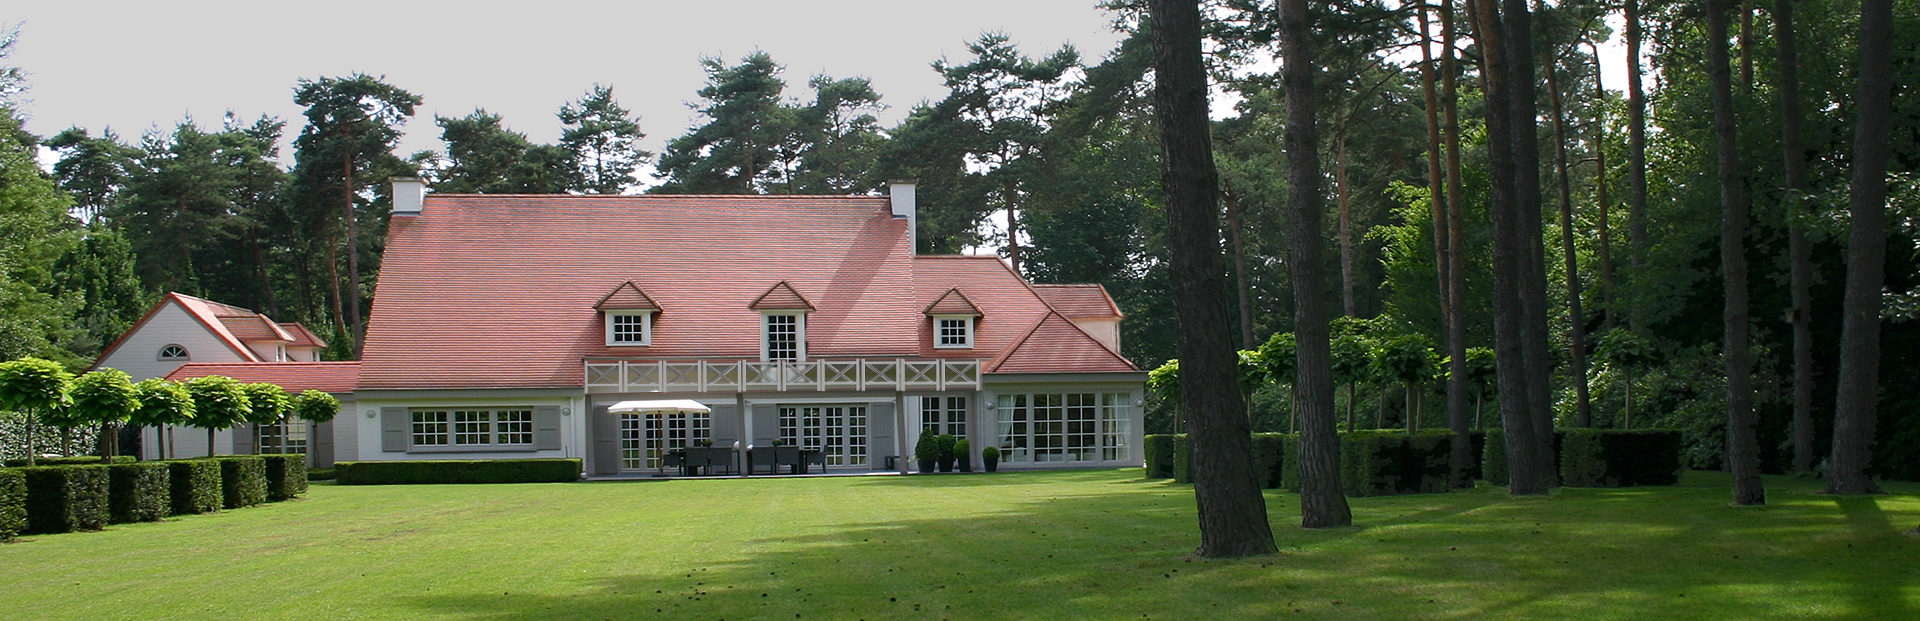 Antwerp villa country style